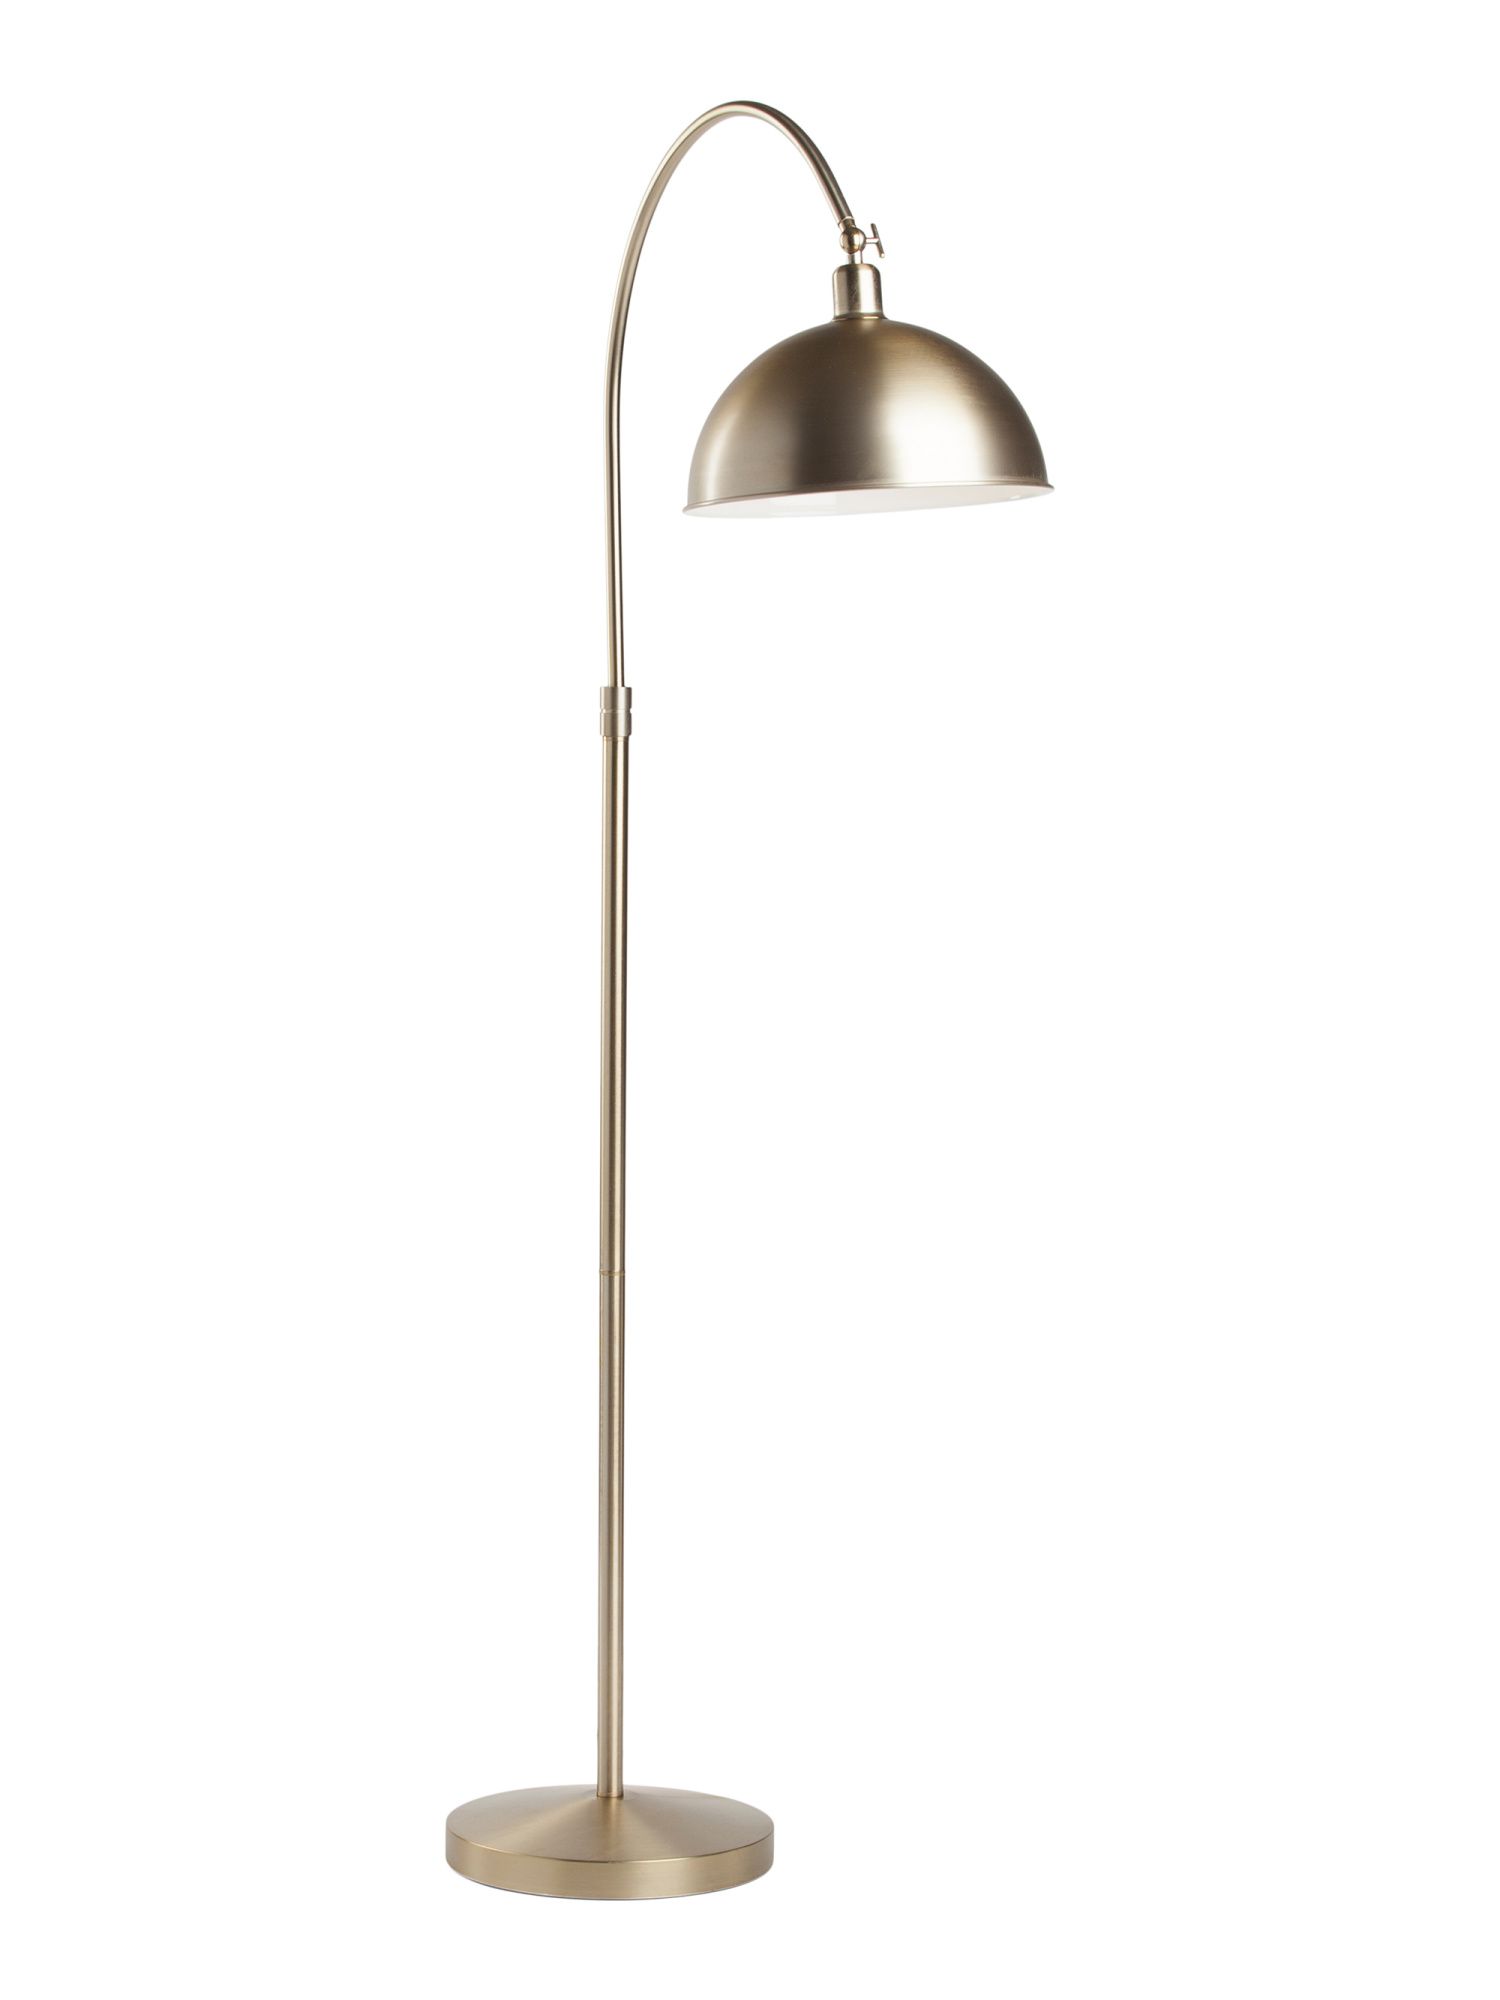 64in Metal Floor Lamp | TJ Maxx